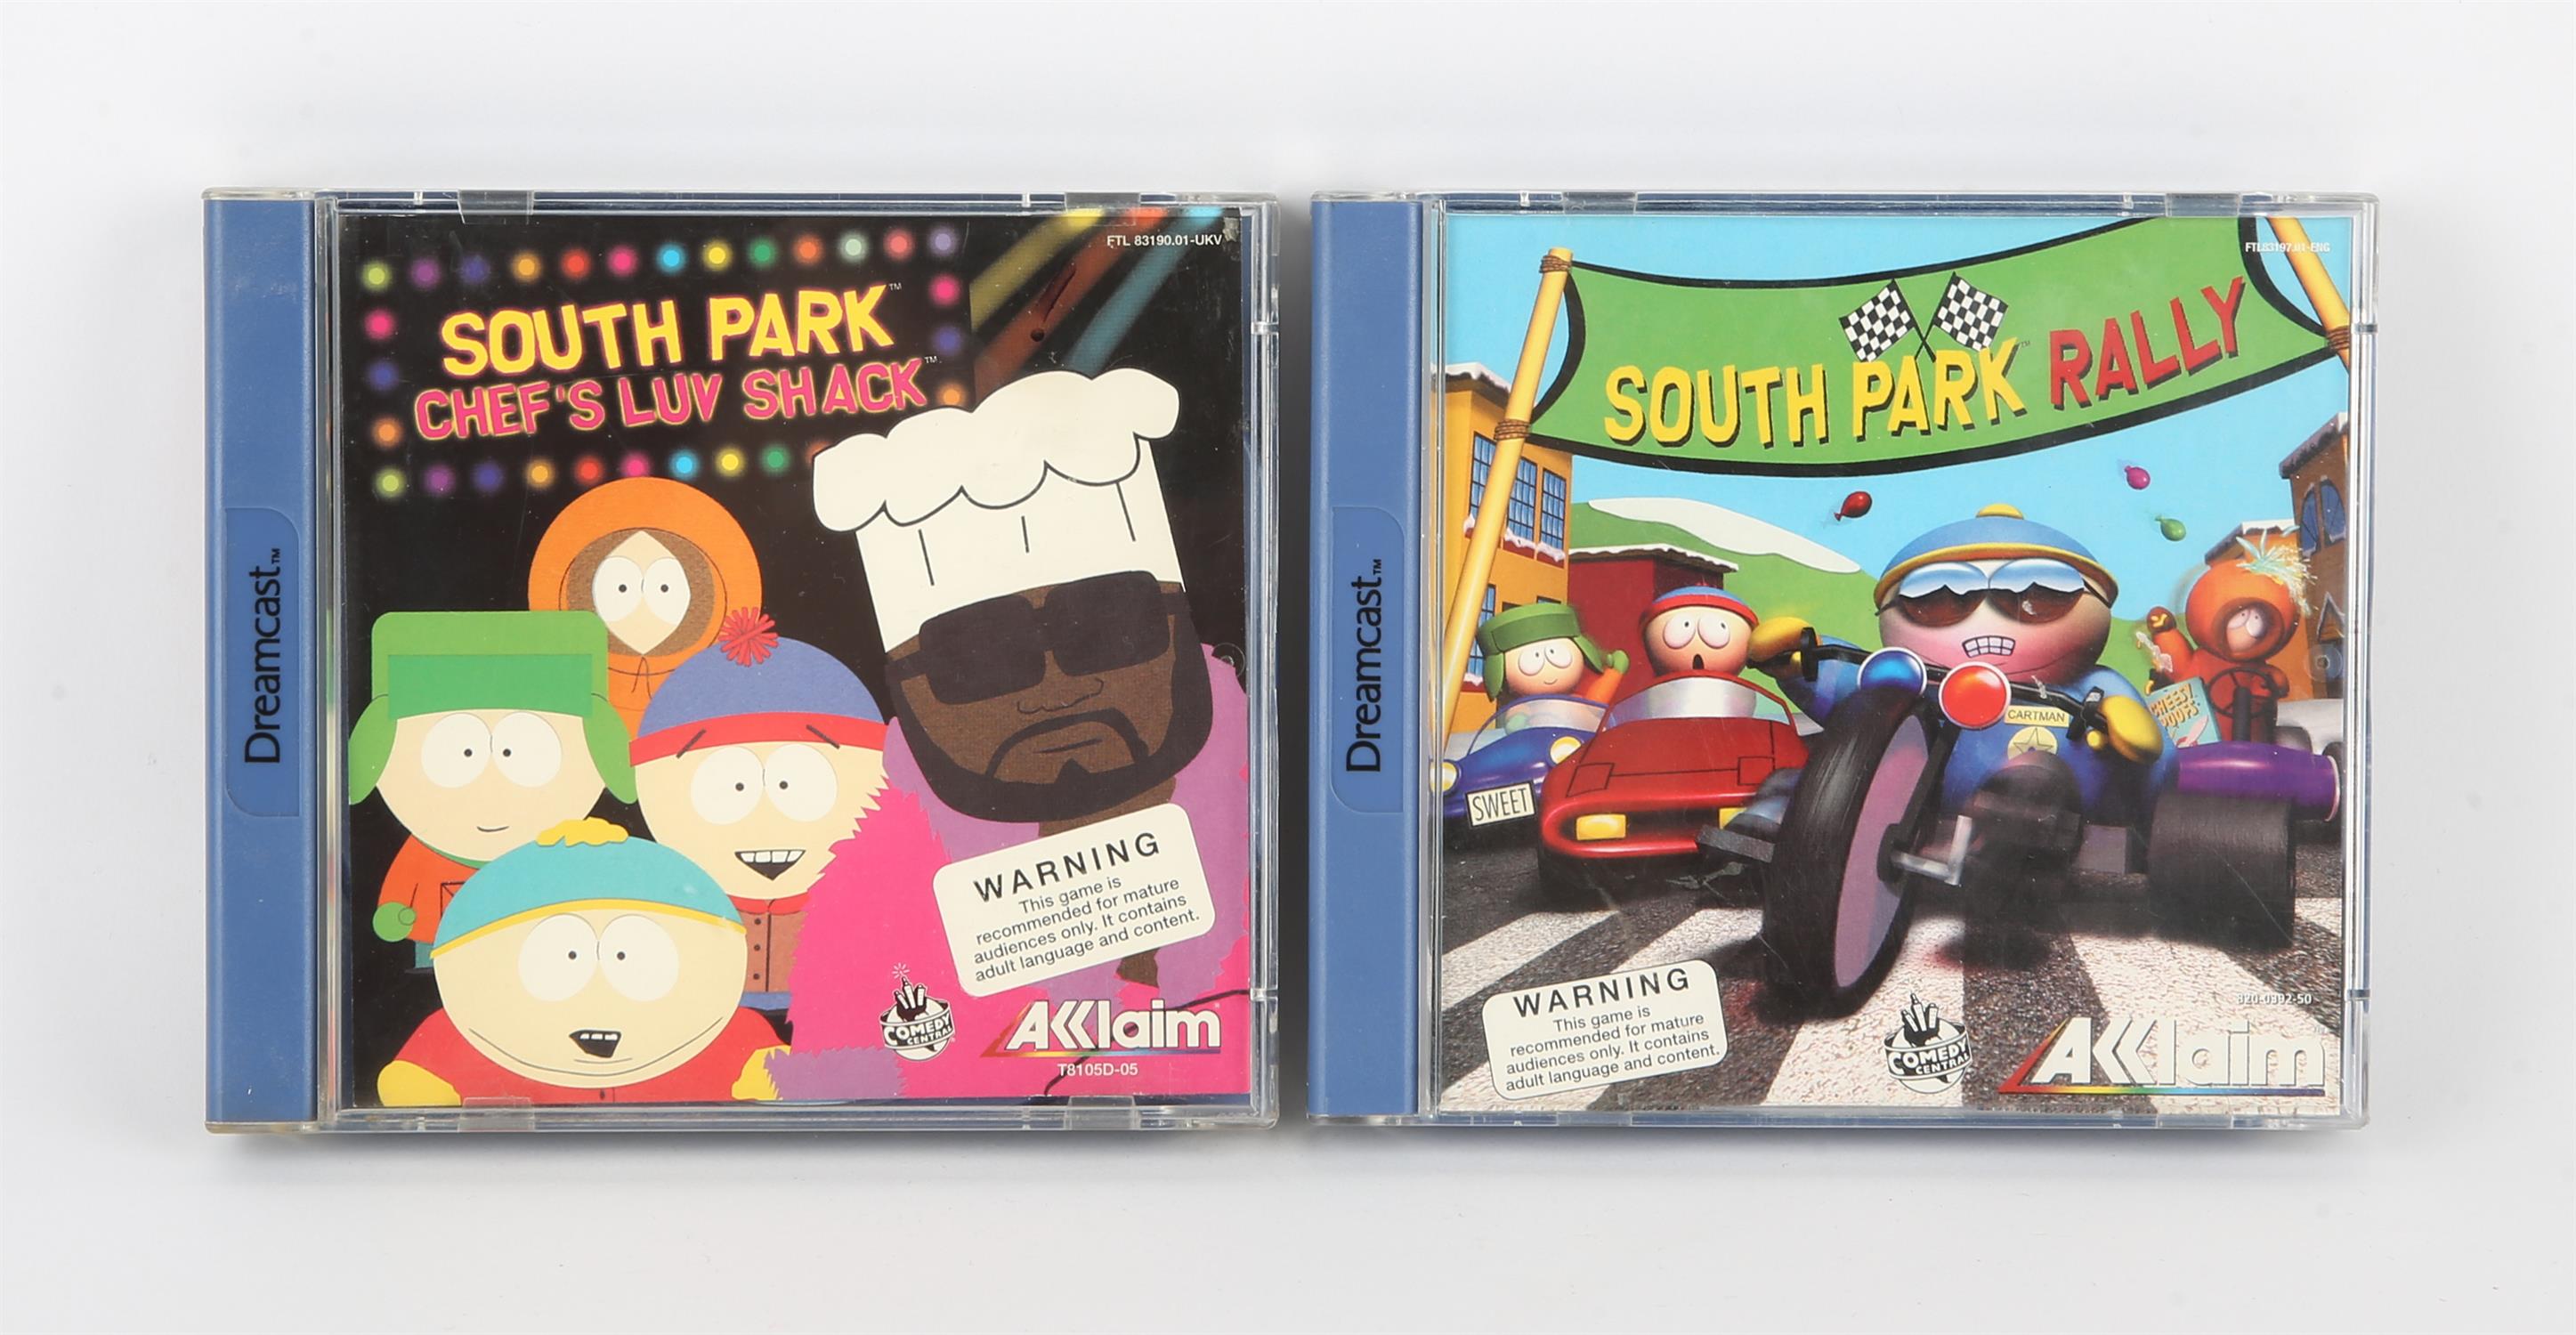 Sega Dreamcast South Park bundle (PAL) Games include: South Park Rally and South Park: Chef's Luv